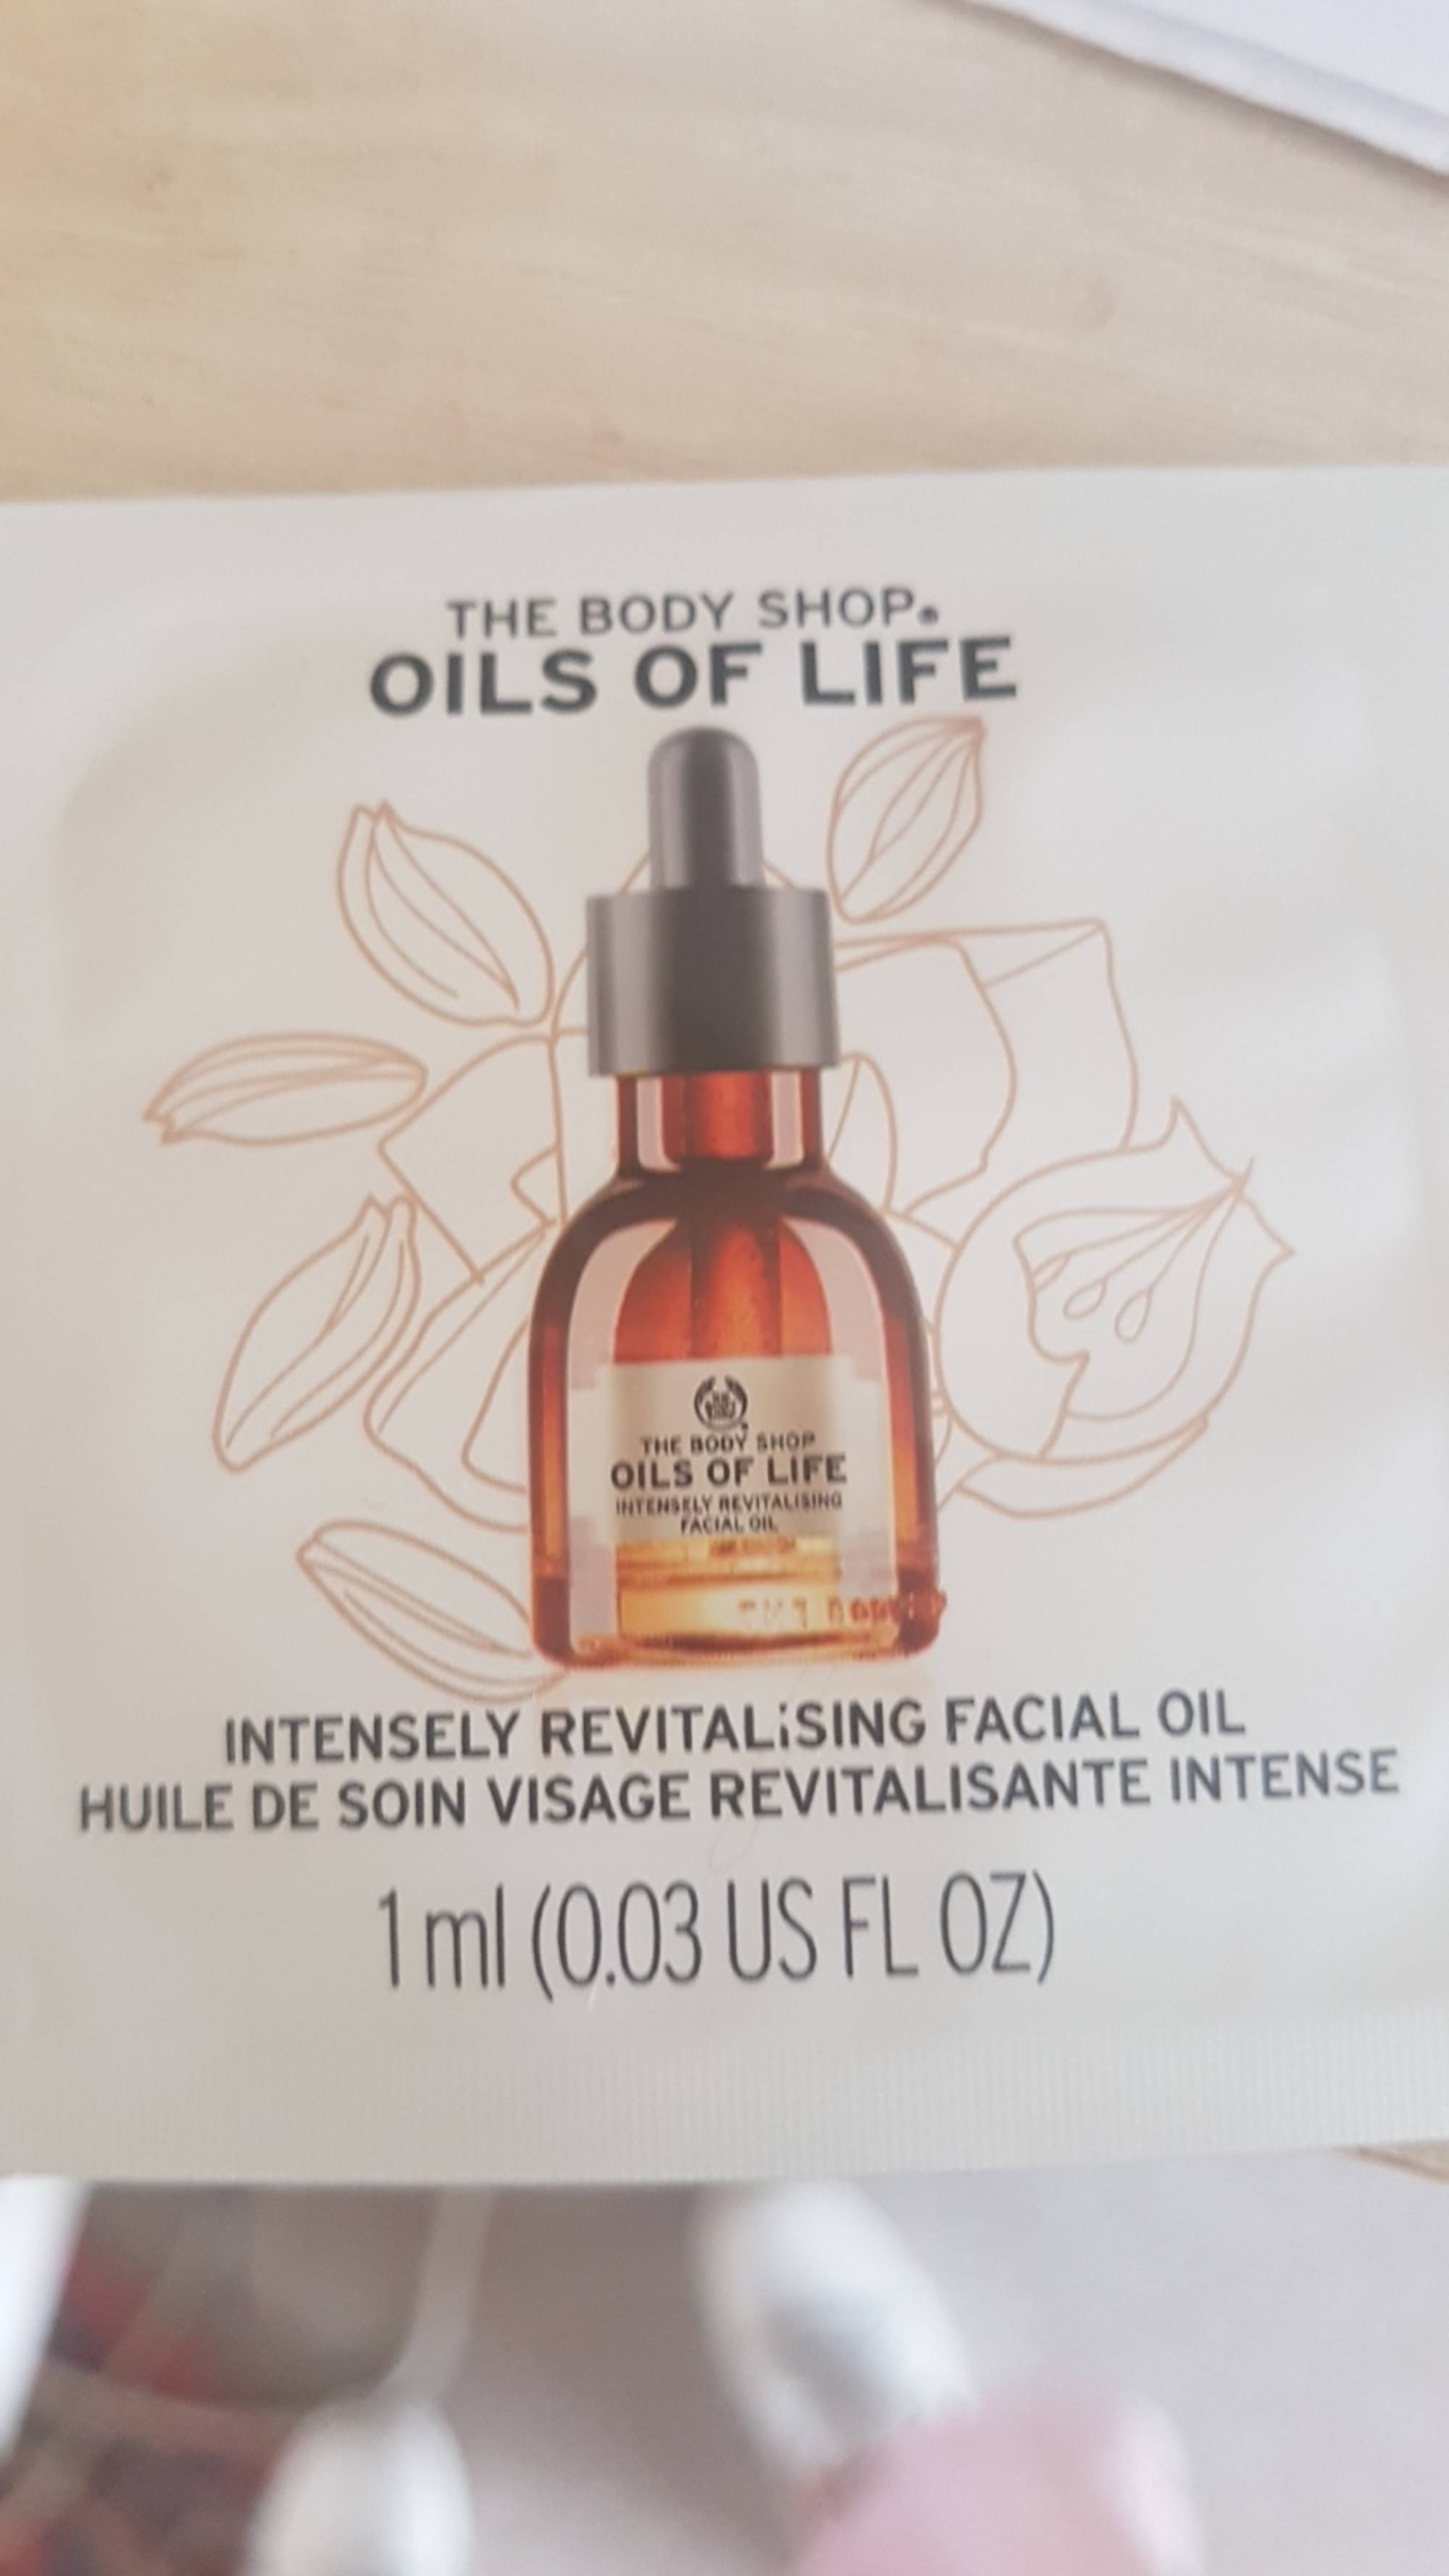 THE BODY SHOP - Oil of life - Huile de soin visage revitalisante intense